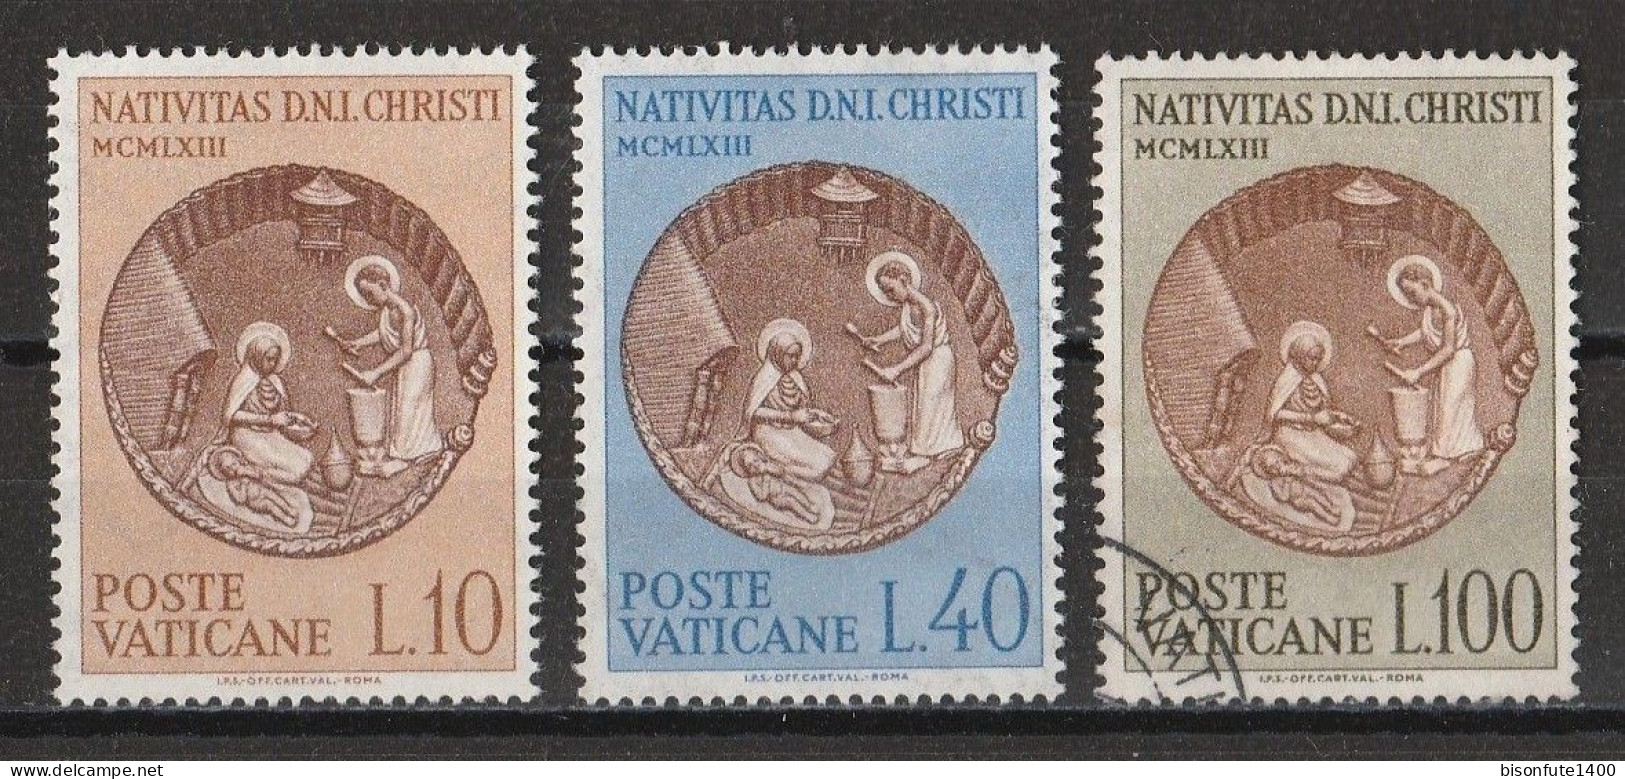 Vatican 1963 : Timbres Yvert & Tellier N° 374 - 375 - 376 - 380 - 381 - 382 - 383 - 384 - 385 - 386 - 387 - 388 -....... - Gebraucht